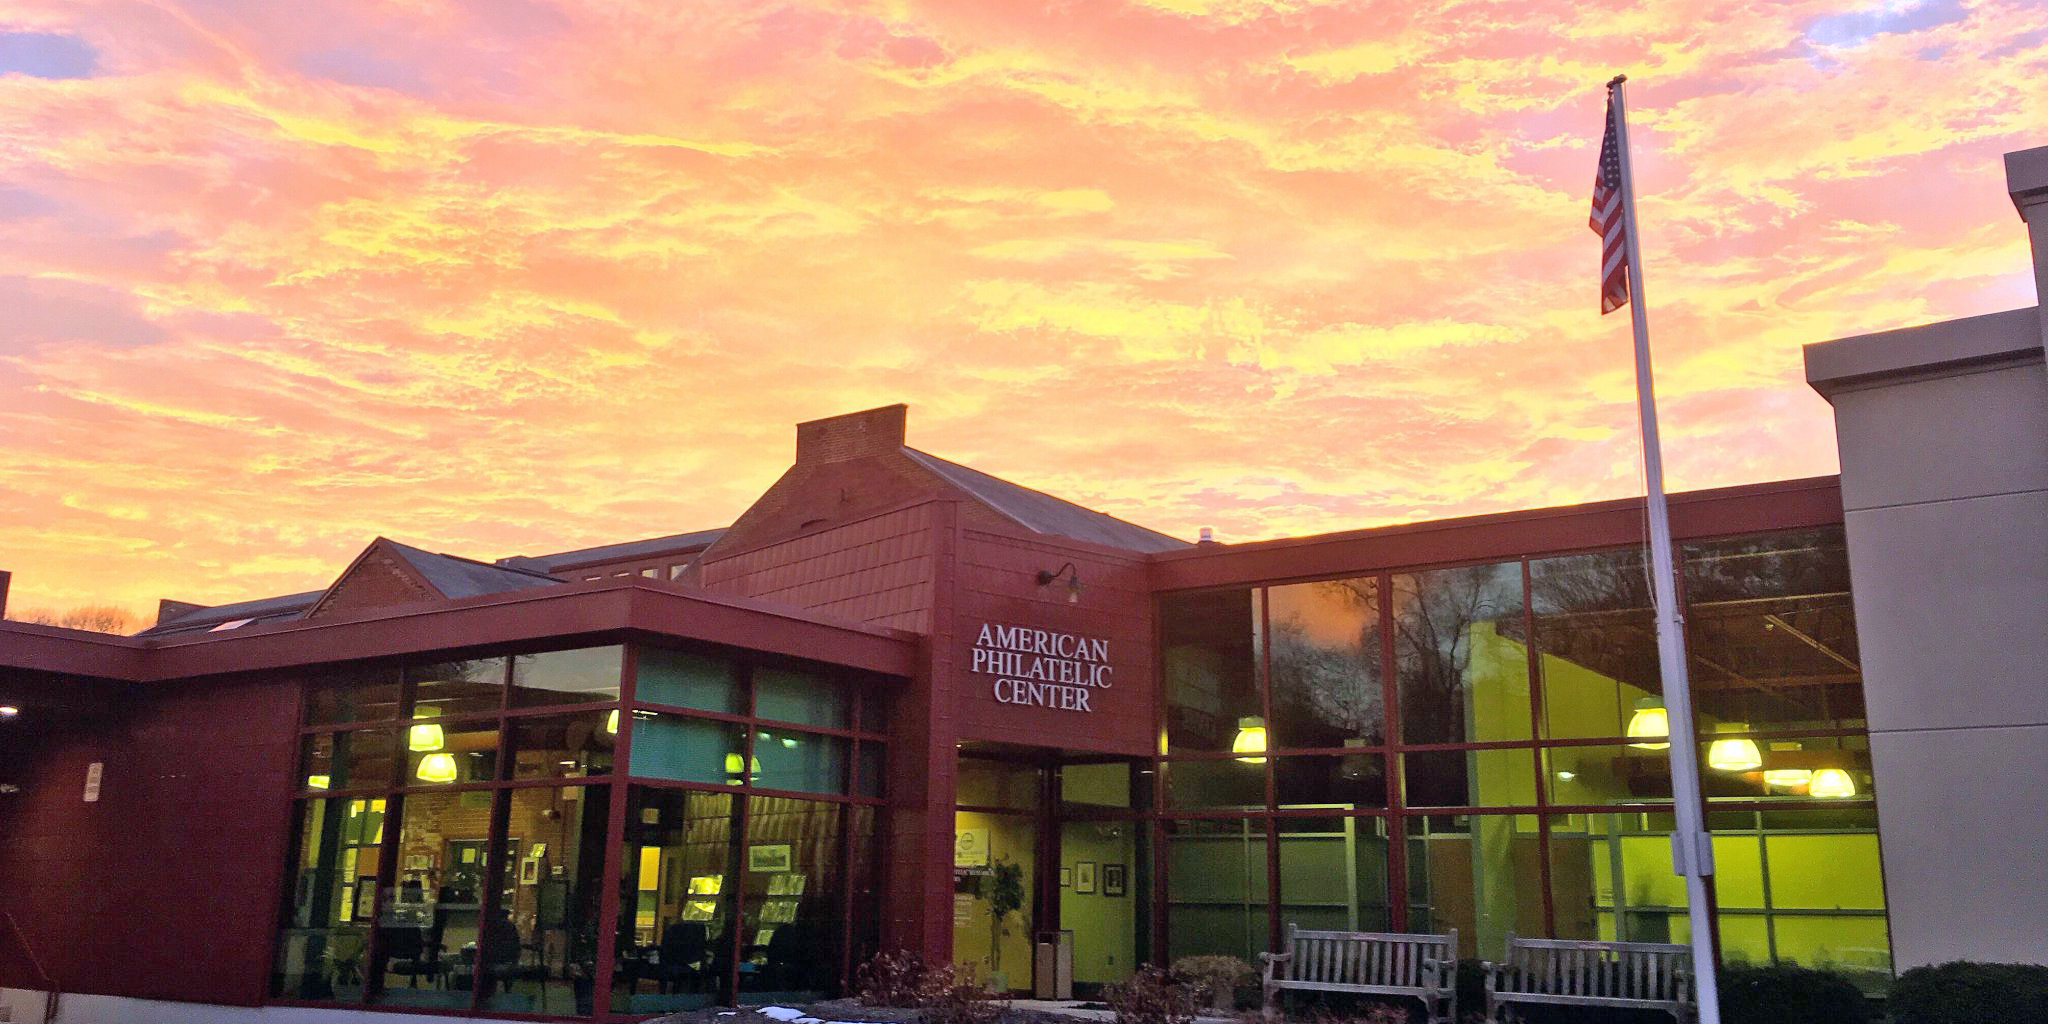 The American Philatelic Center at sunrise